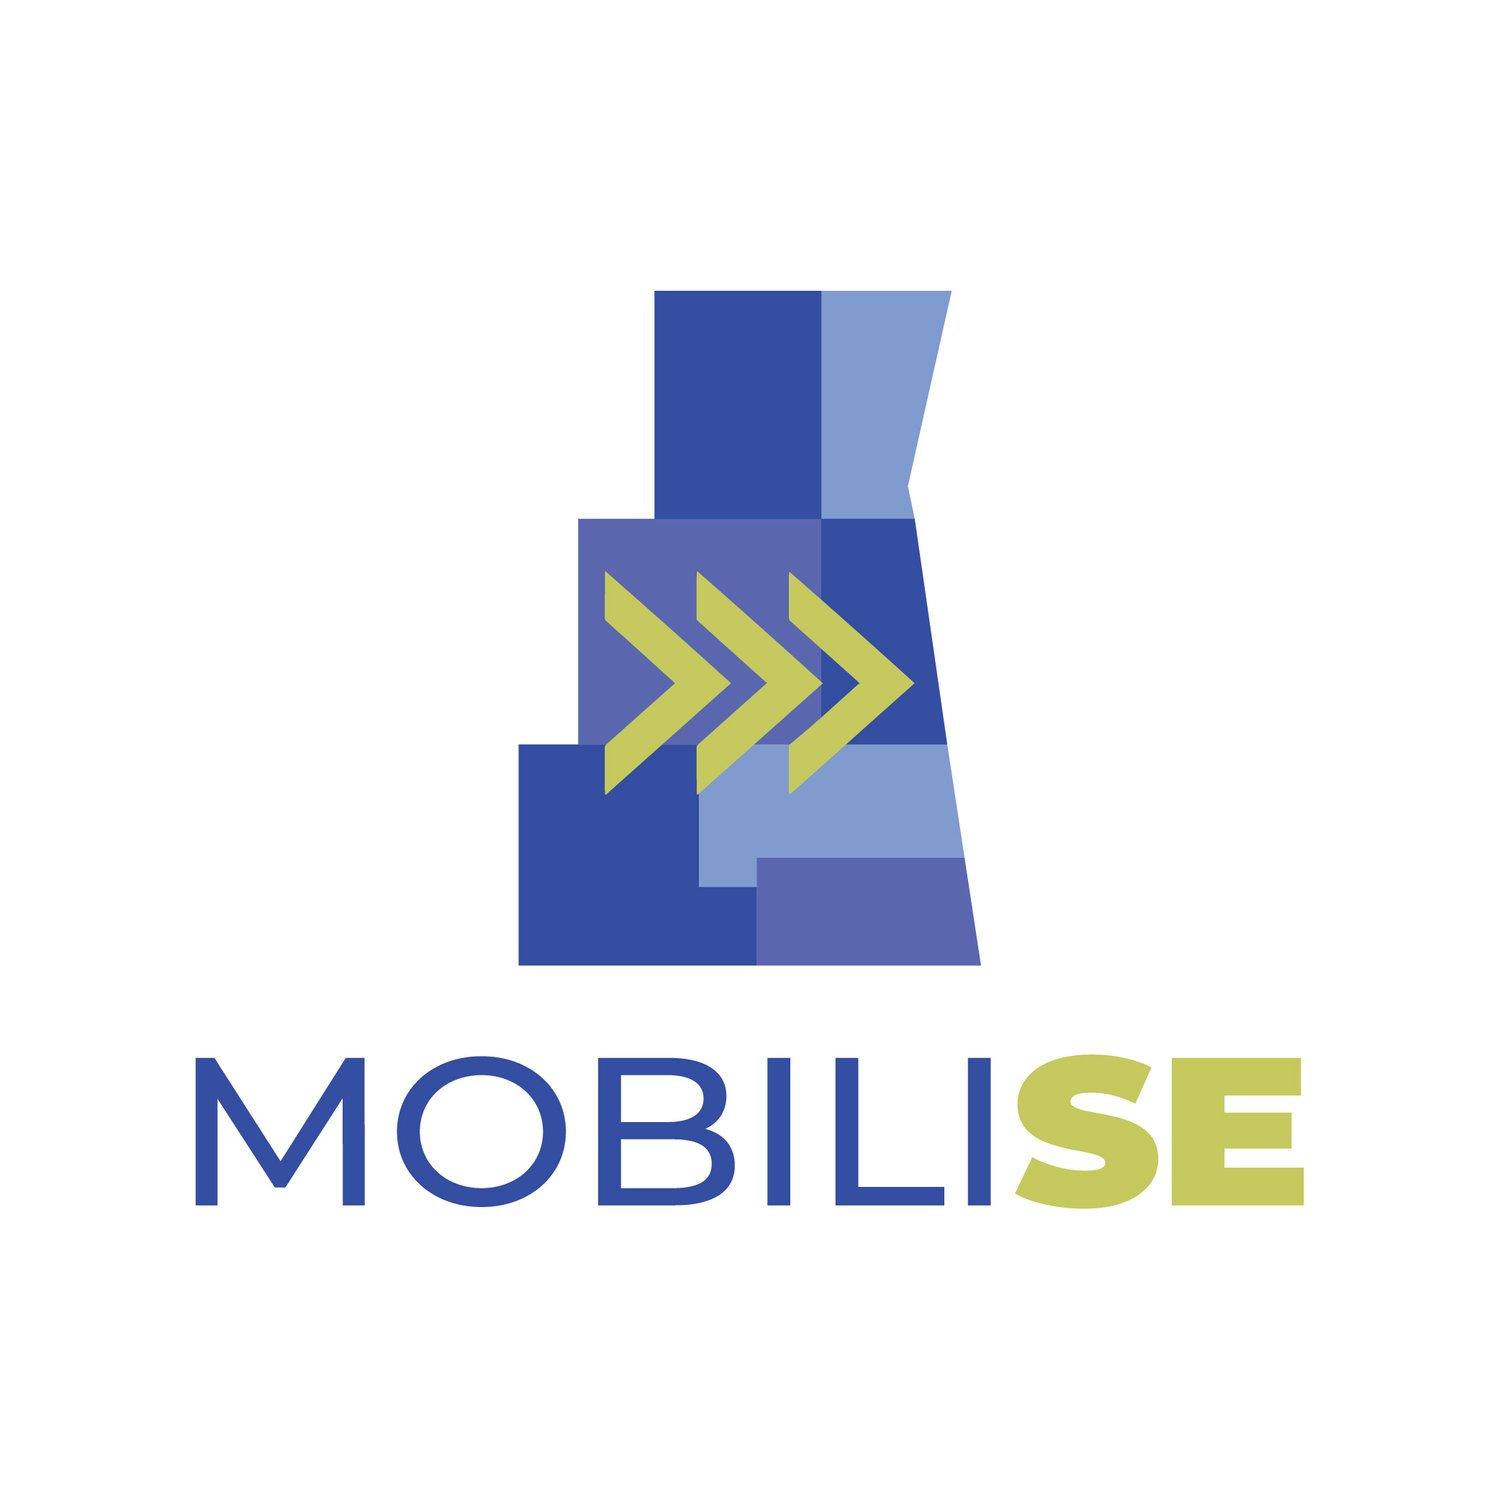 MobiliSE: Moving Transportation Forward in SE Wisconsin